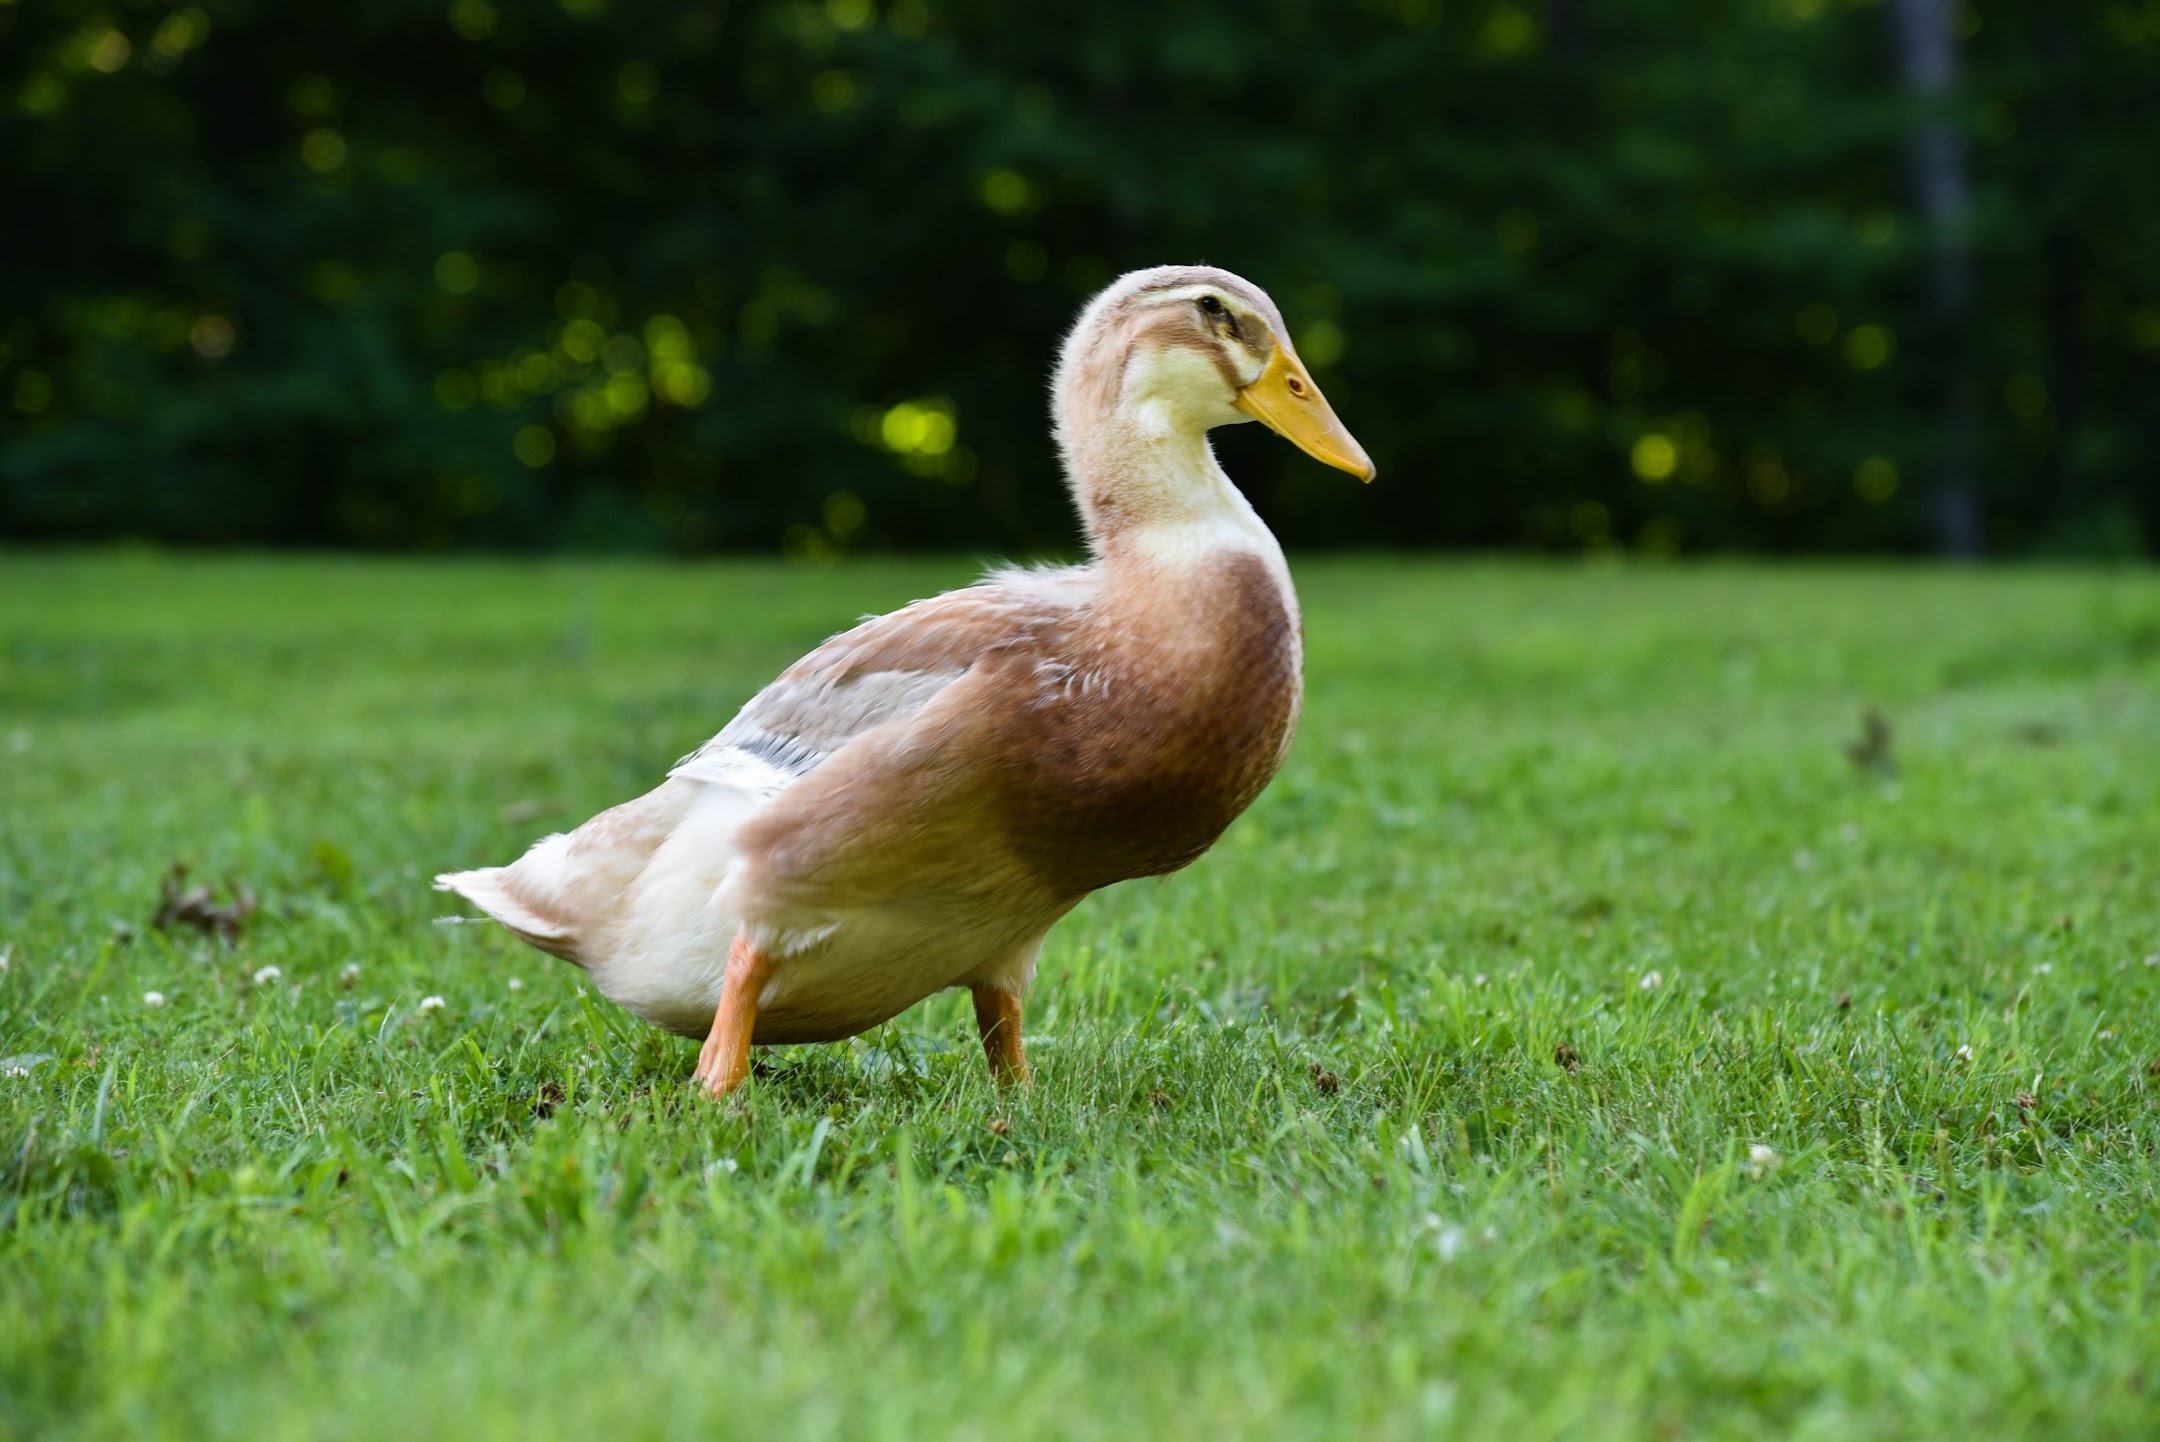 Saxony Duck - The Livestock Conservancy